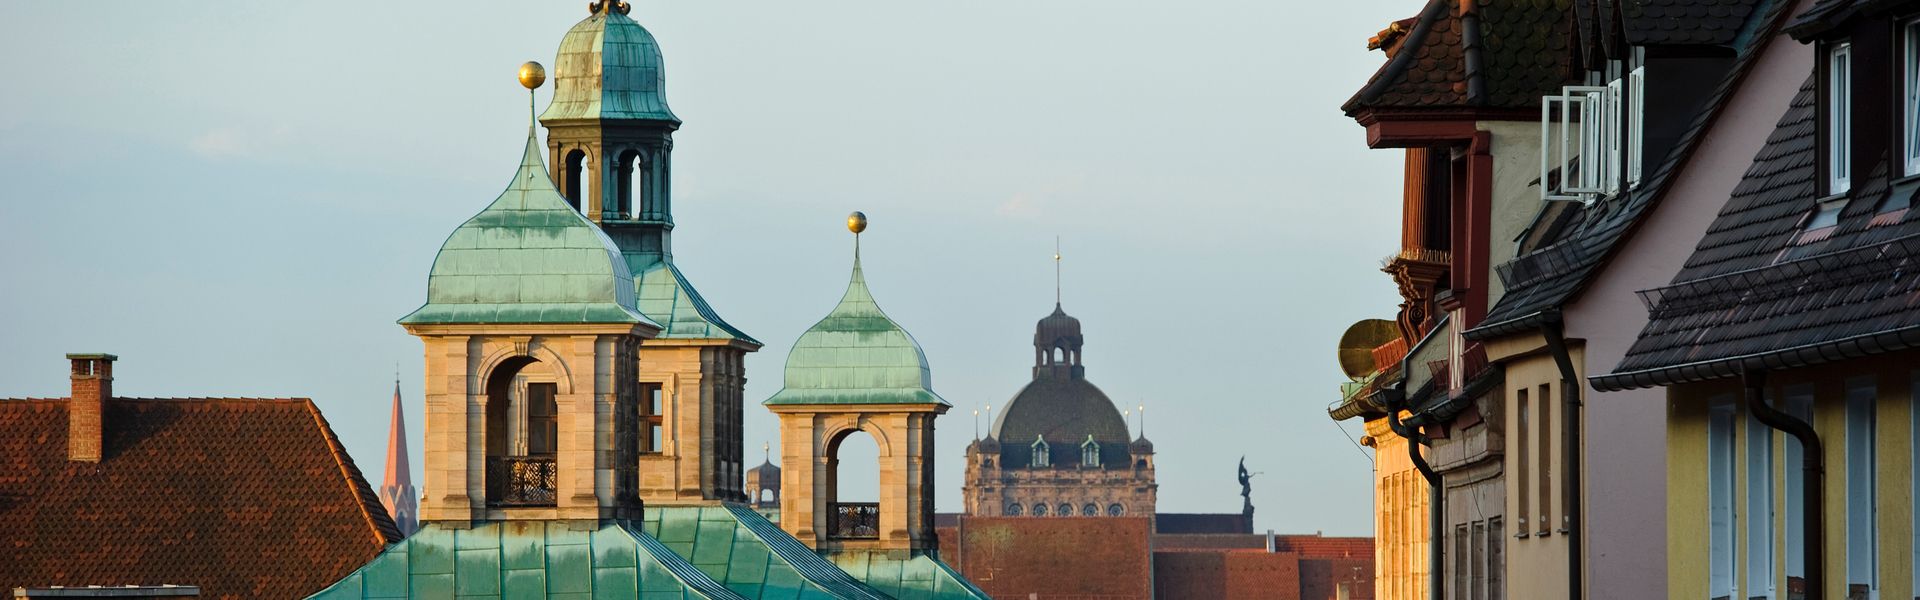 Blick über die Nürnberger Altstadt